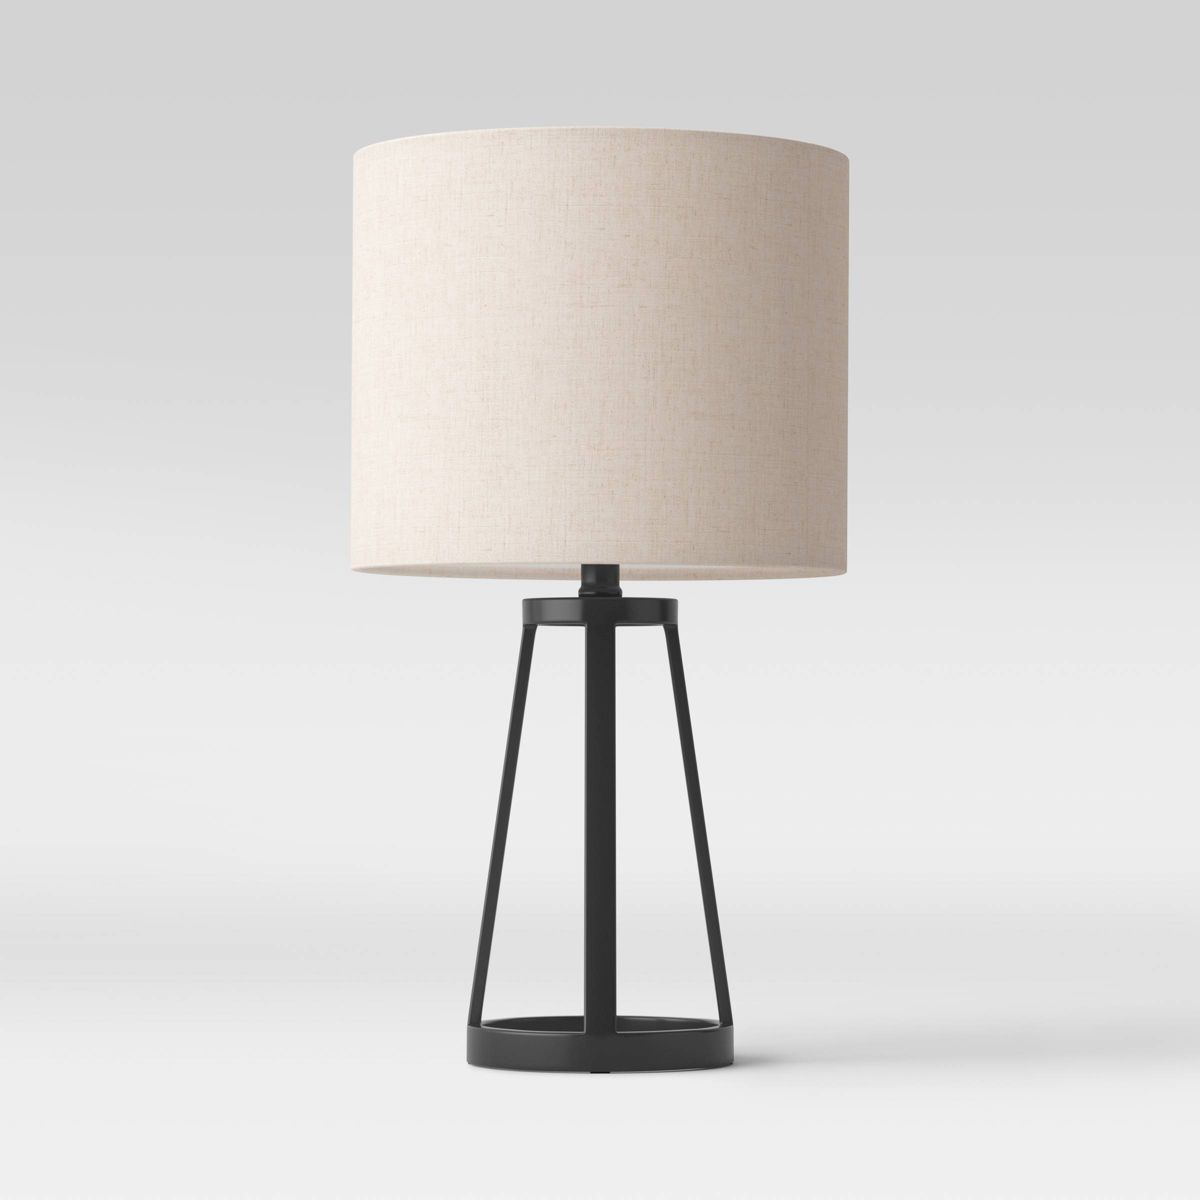 Medium Modern Industrial Assembled Table Lamp - Threshold™ | Target